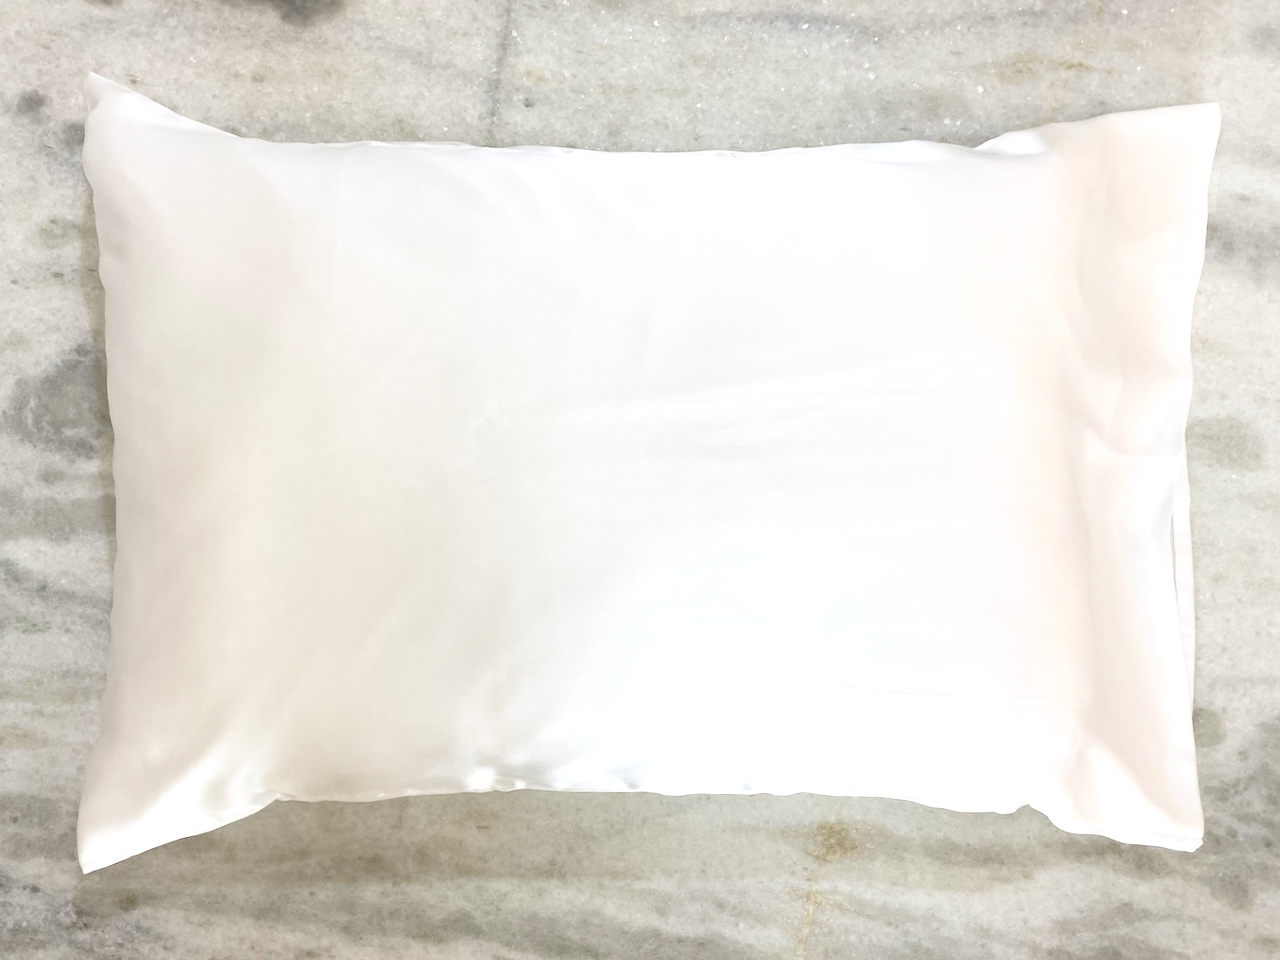 Organic silk pillowcase made in France – Silkbiotic